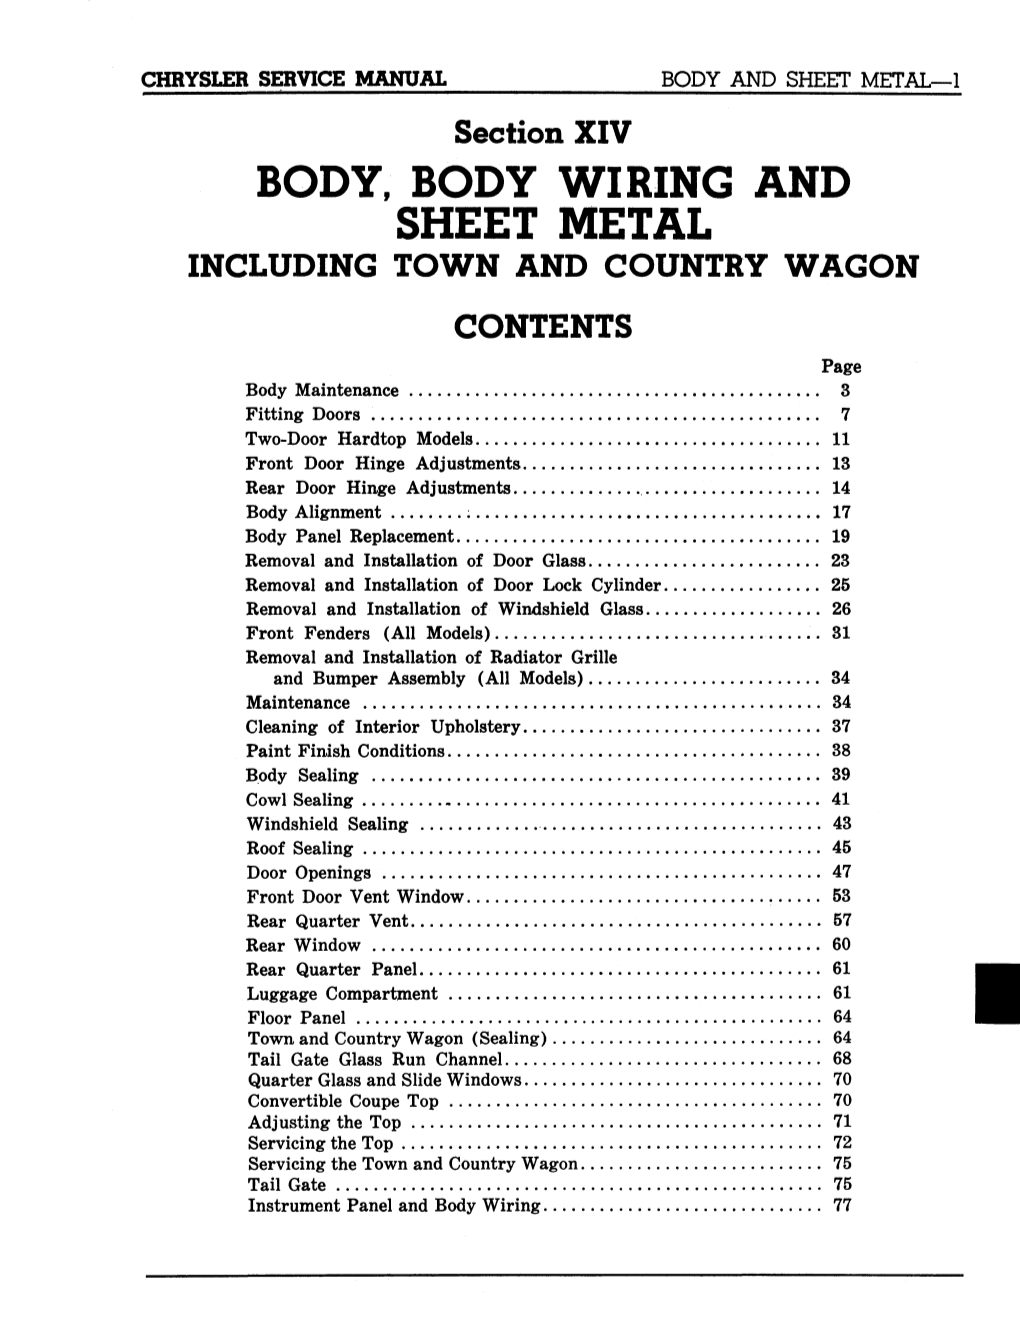 Body, Body Wiring and Sheet Metal